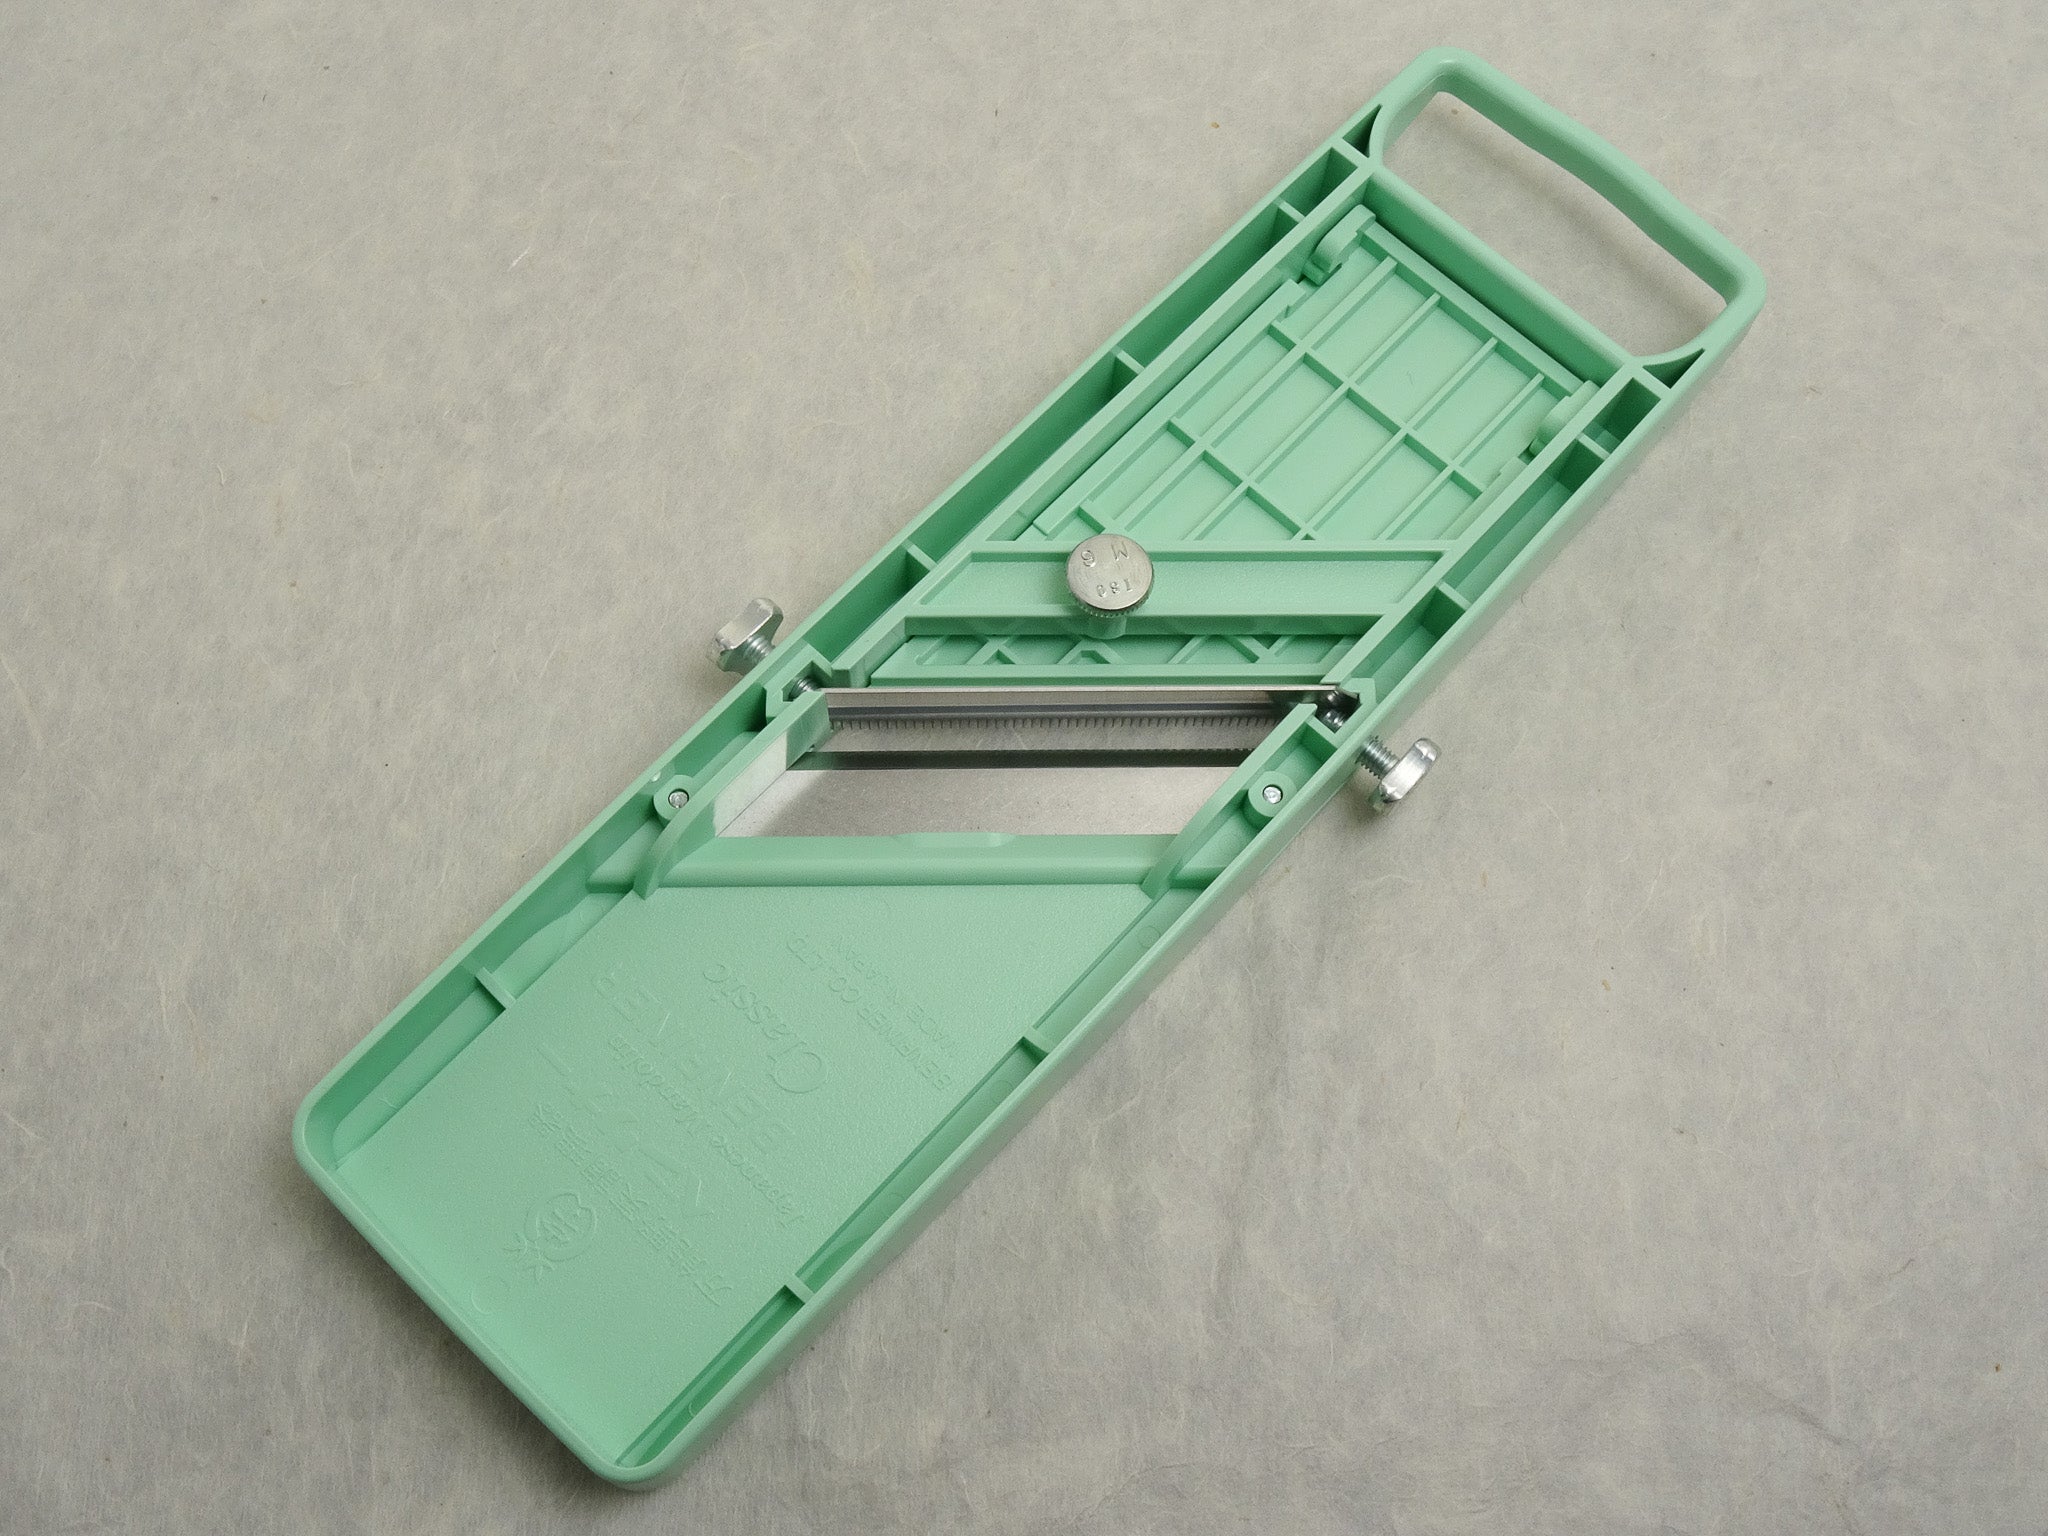 New Mandoline Slicer New Benriner Japanese Mandoline Slicer Green made in  Japan By VV 's store 